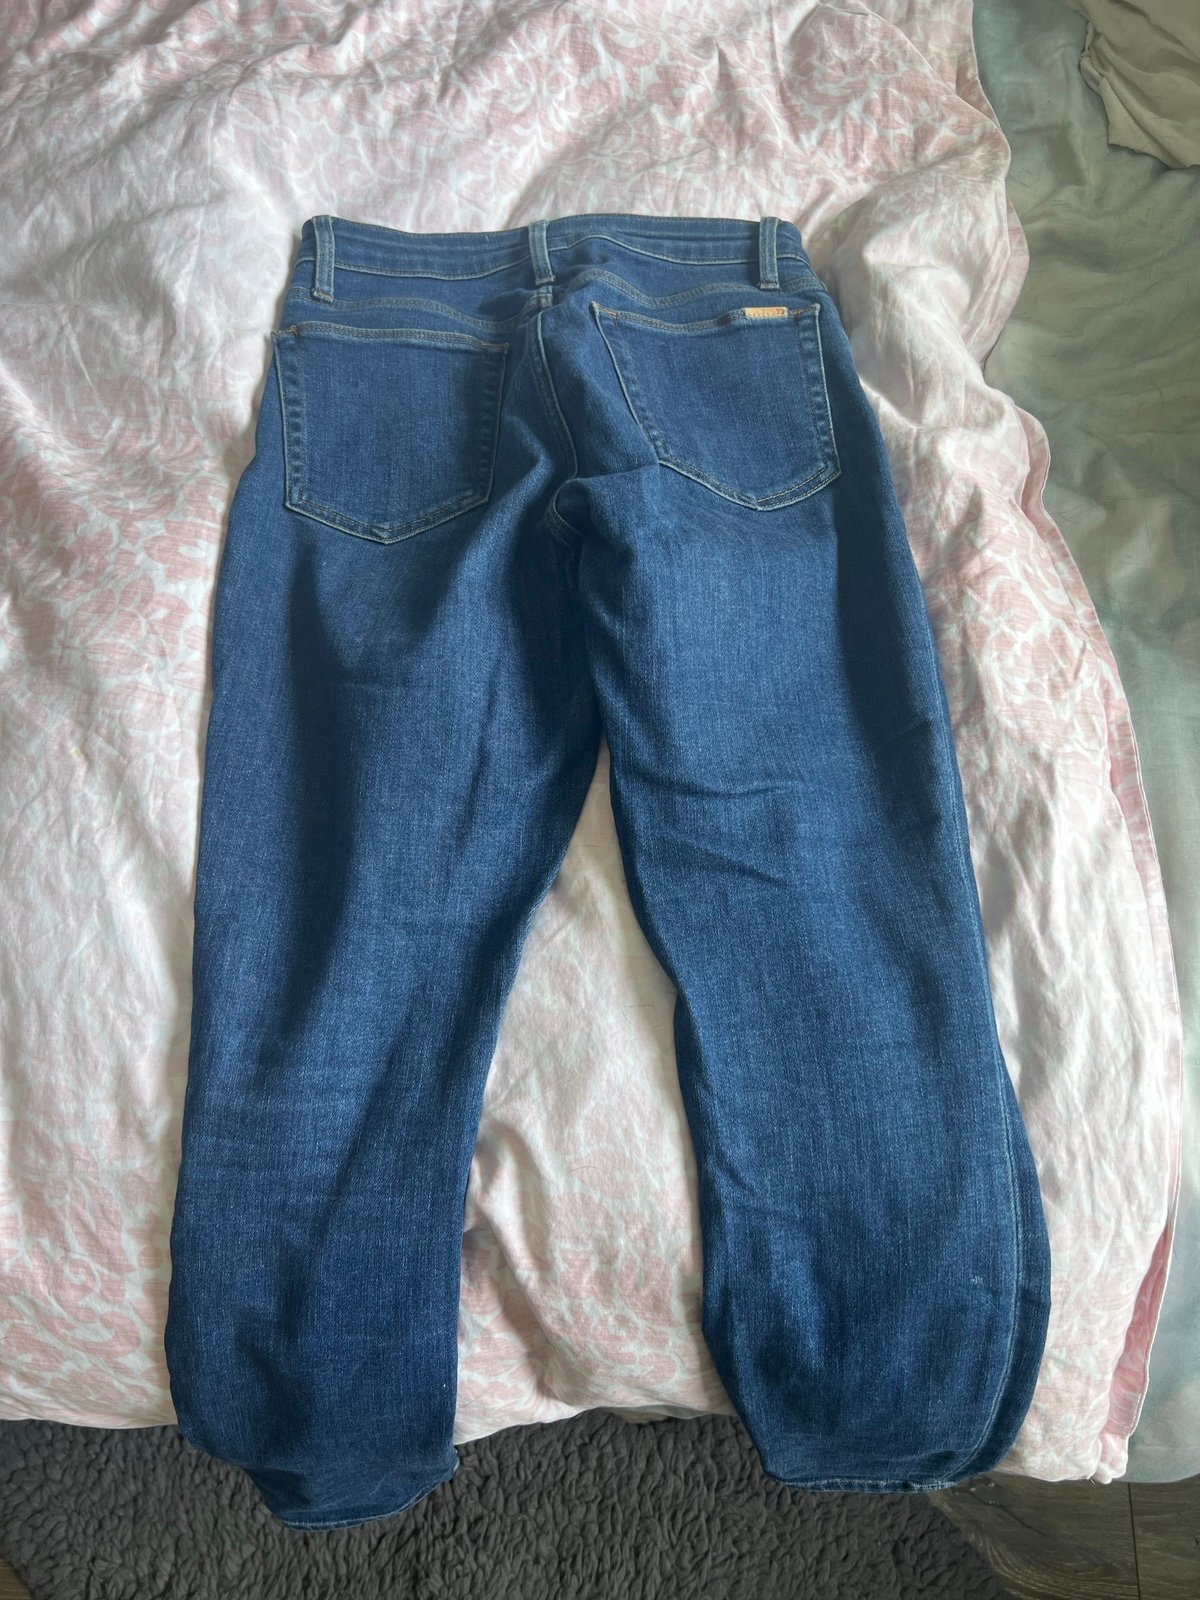 the Lowest price Joes jeans size 27 iMsFMKXk0 no tax